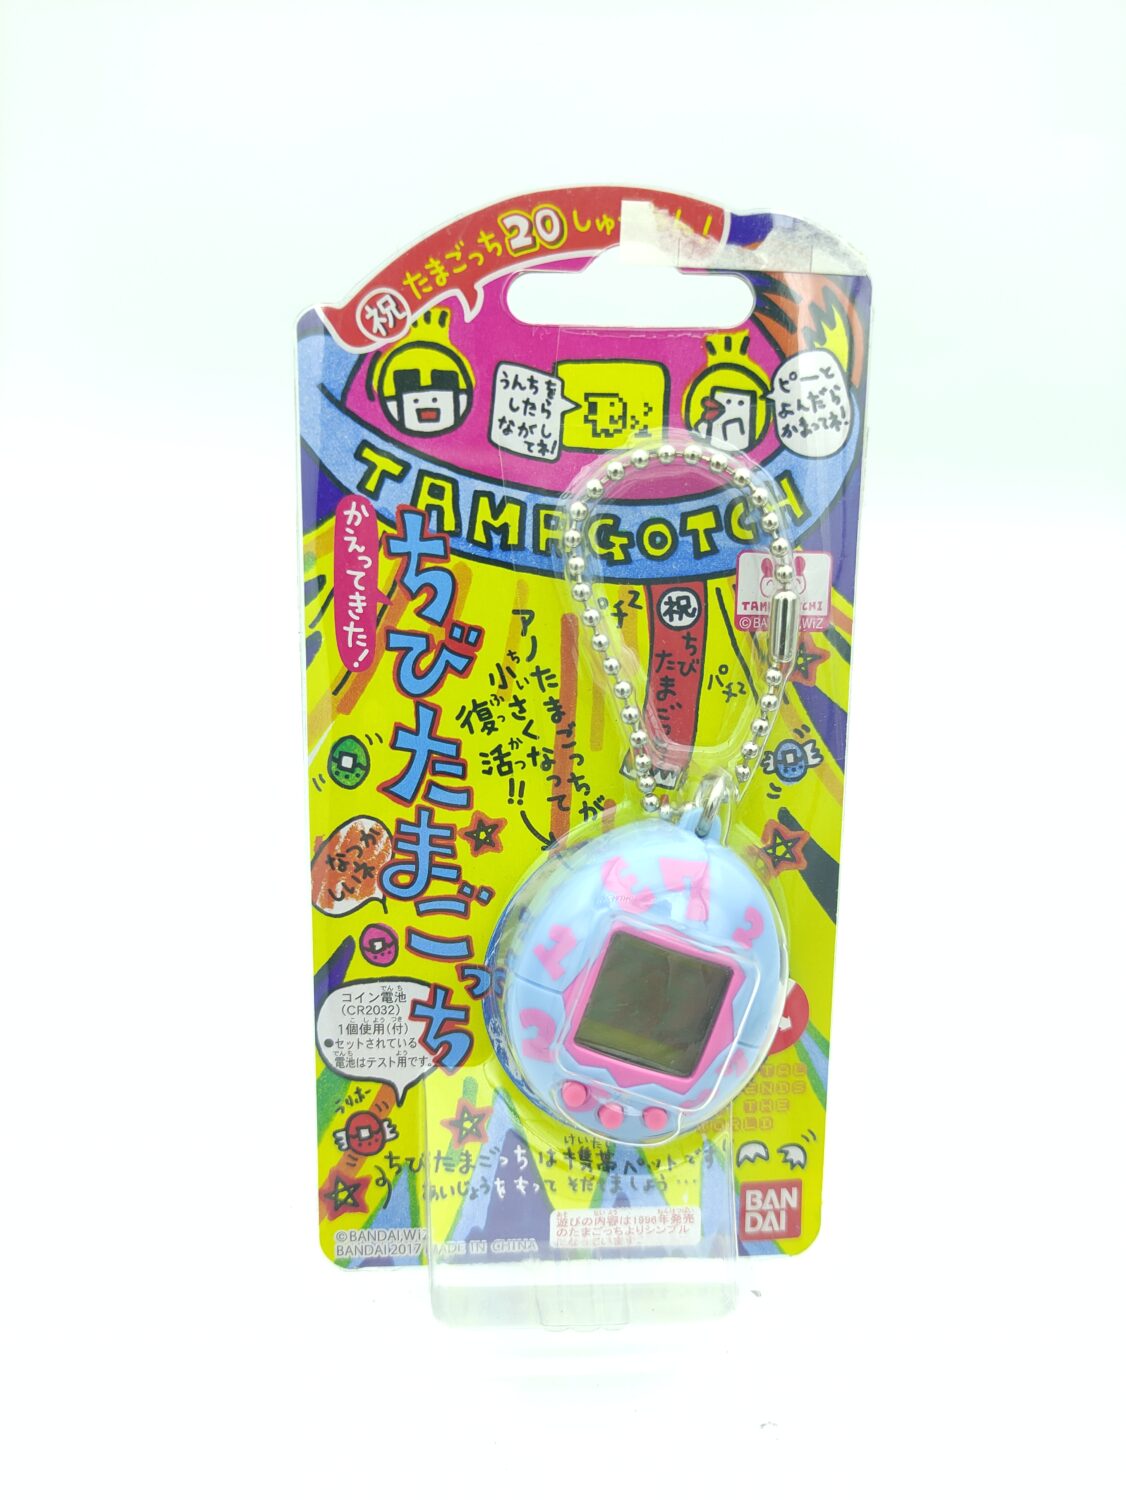 Tamagotchi Bandai Original Chibi Mini Blue w/ pink boxed Boutique-Tamagotchis